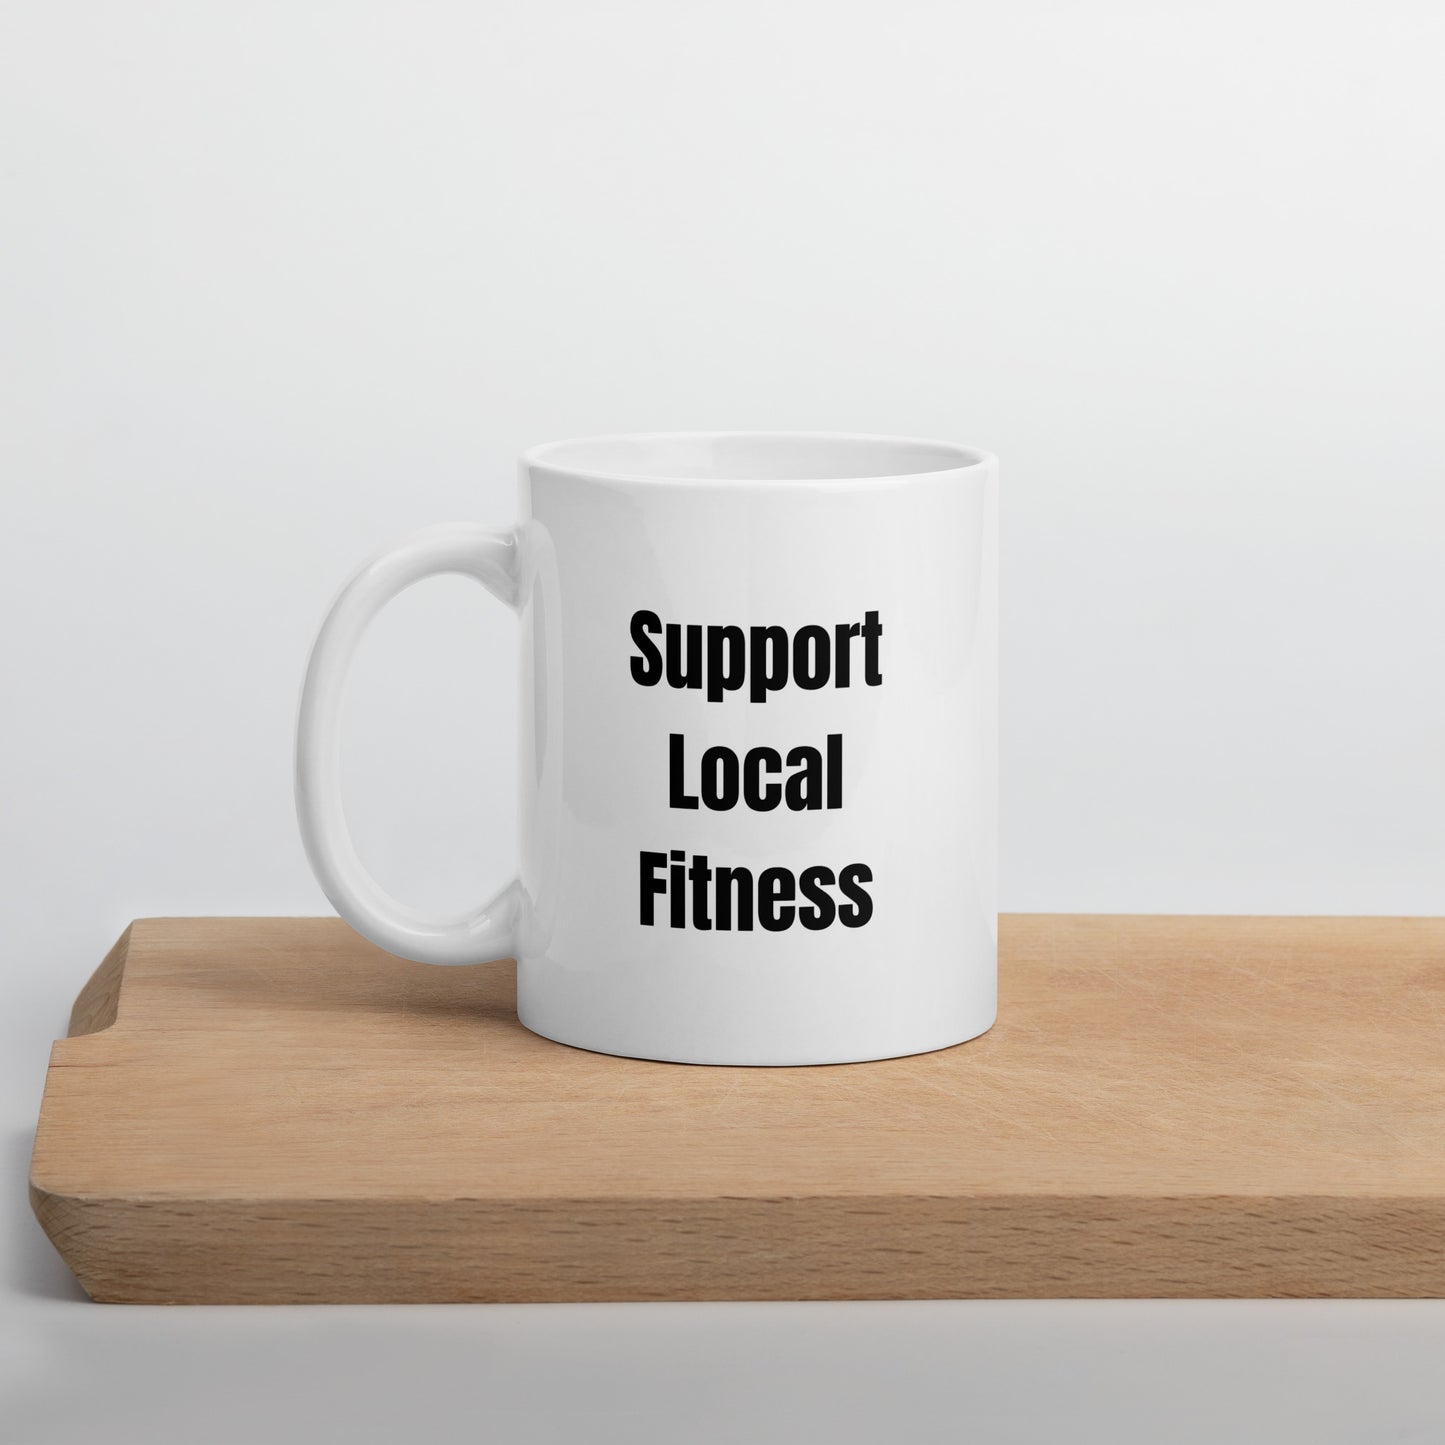 Support Local Fitness Crossfit mug, Crossfit gift for men and women, Crossfit gifts, Crossfit coffee mug, Crossfit cup